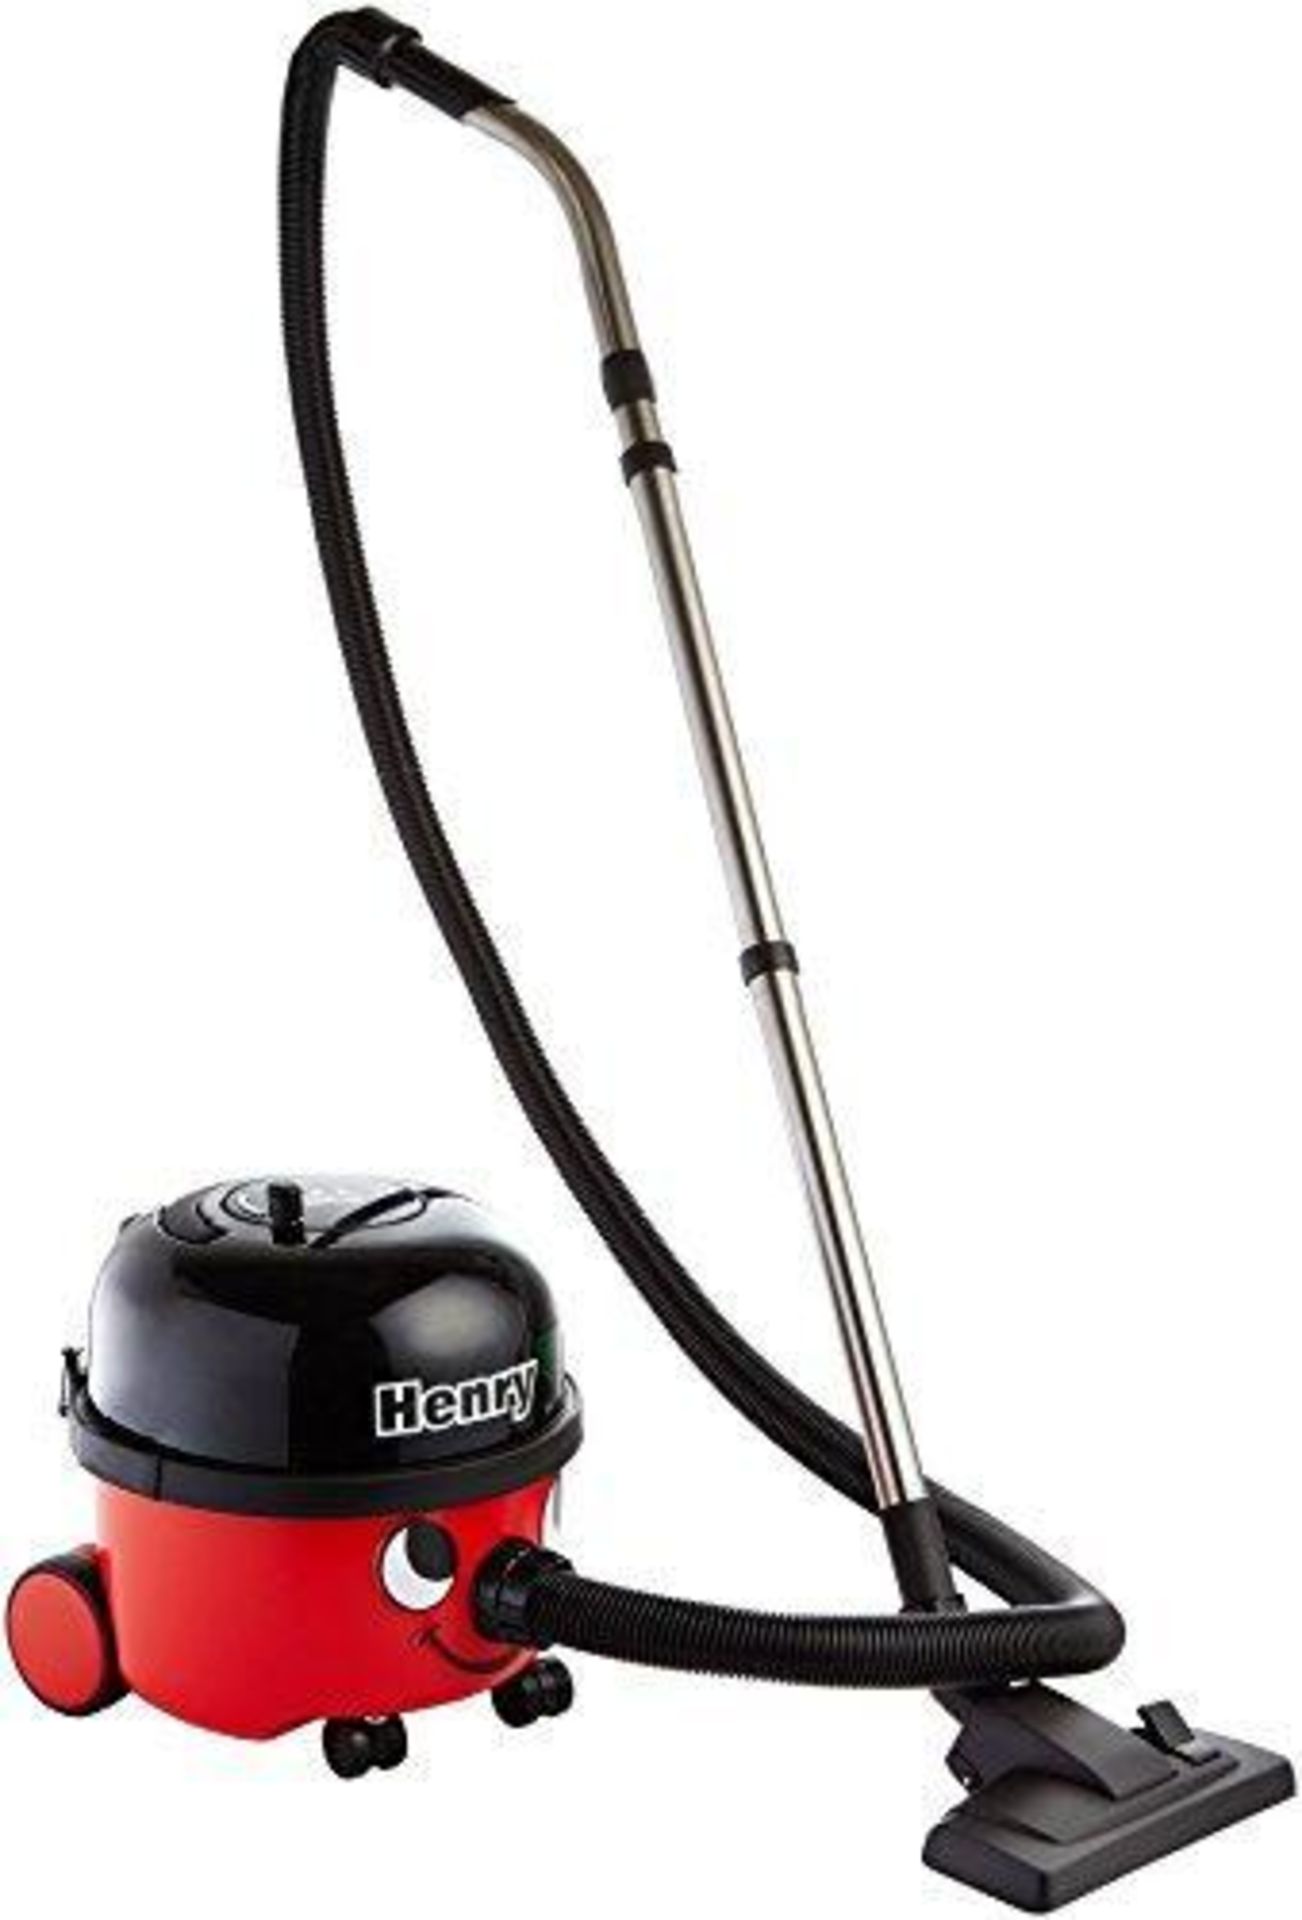 Numatic Henry Vacuum Cleaner Bagged 620 W - Red/Black (Model No. HVR200N) - SR4R. Henry Vacuum - Image 2 of 2